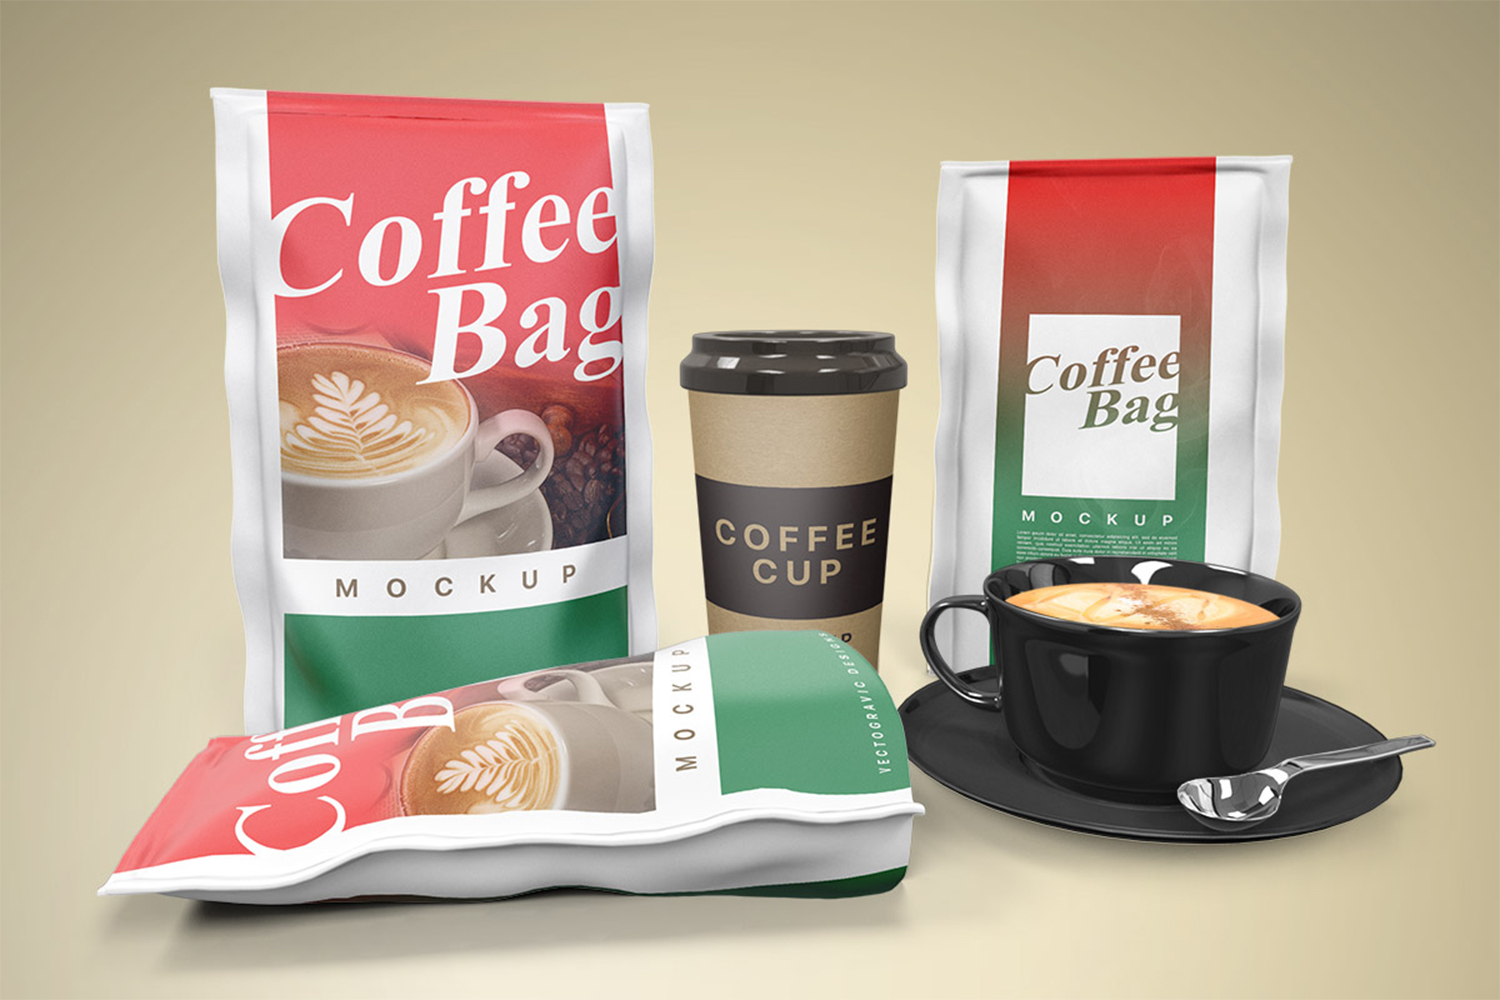 Coffee Bag Mockup Free Download